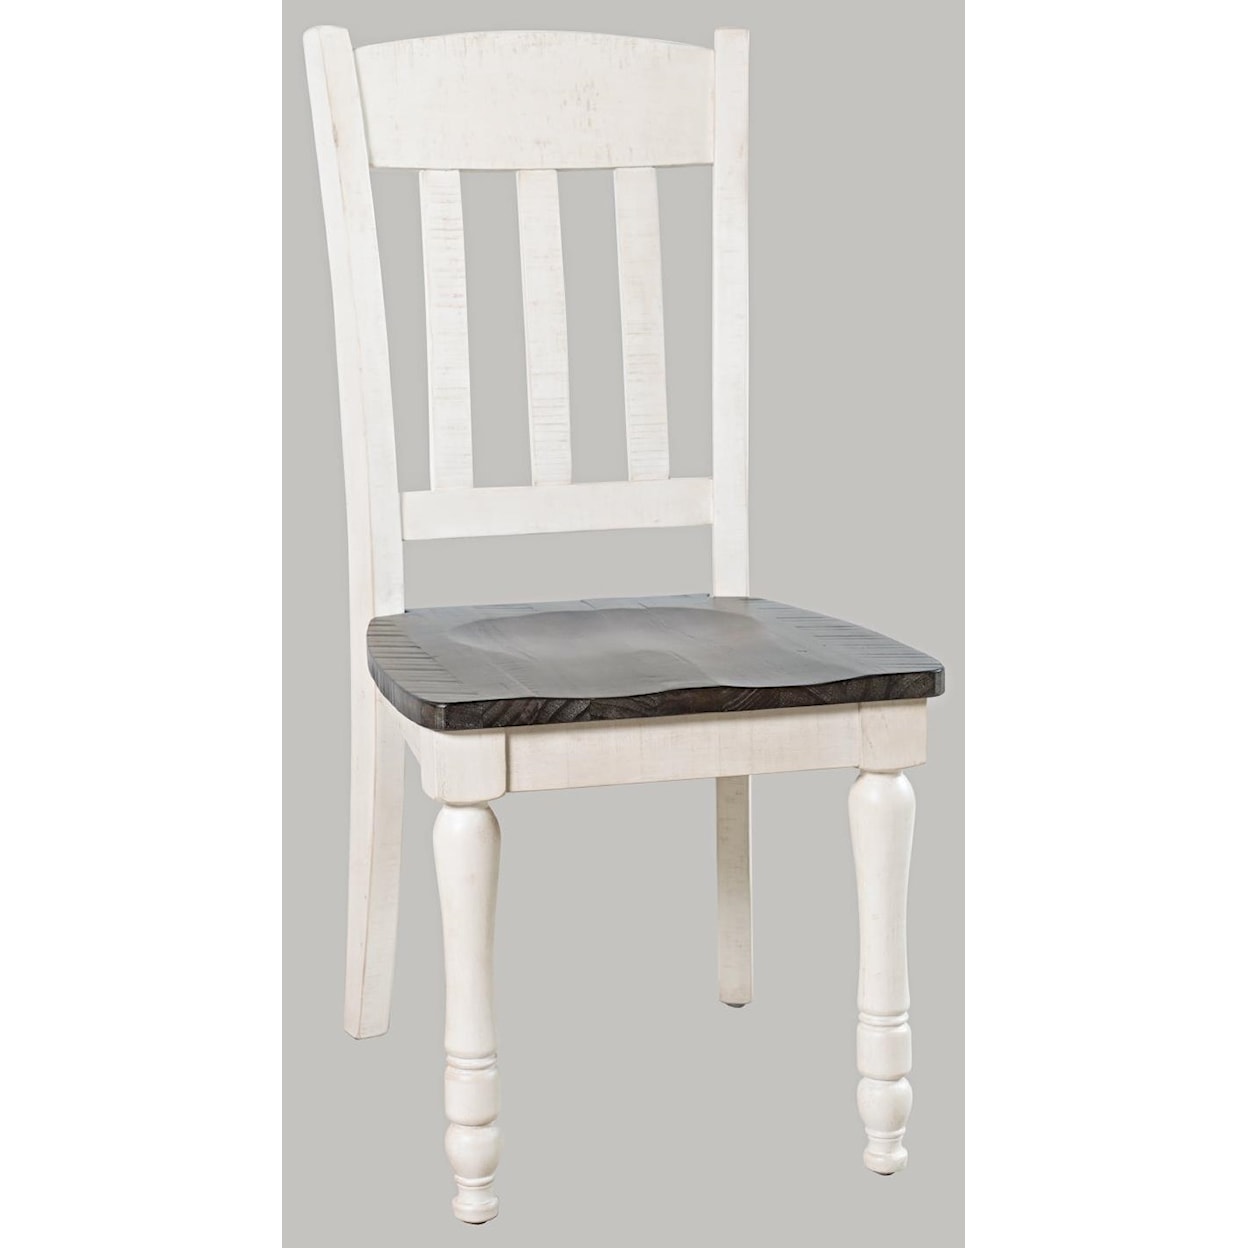 Jofran Jofran Slatback Dining Chair